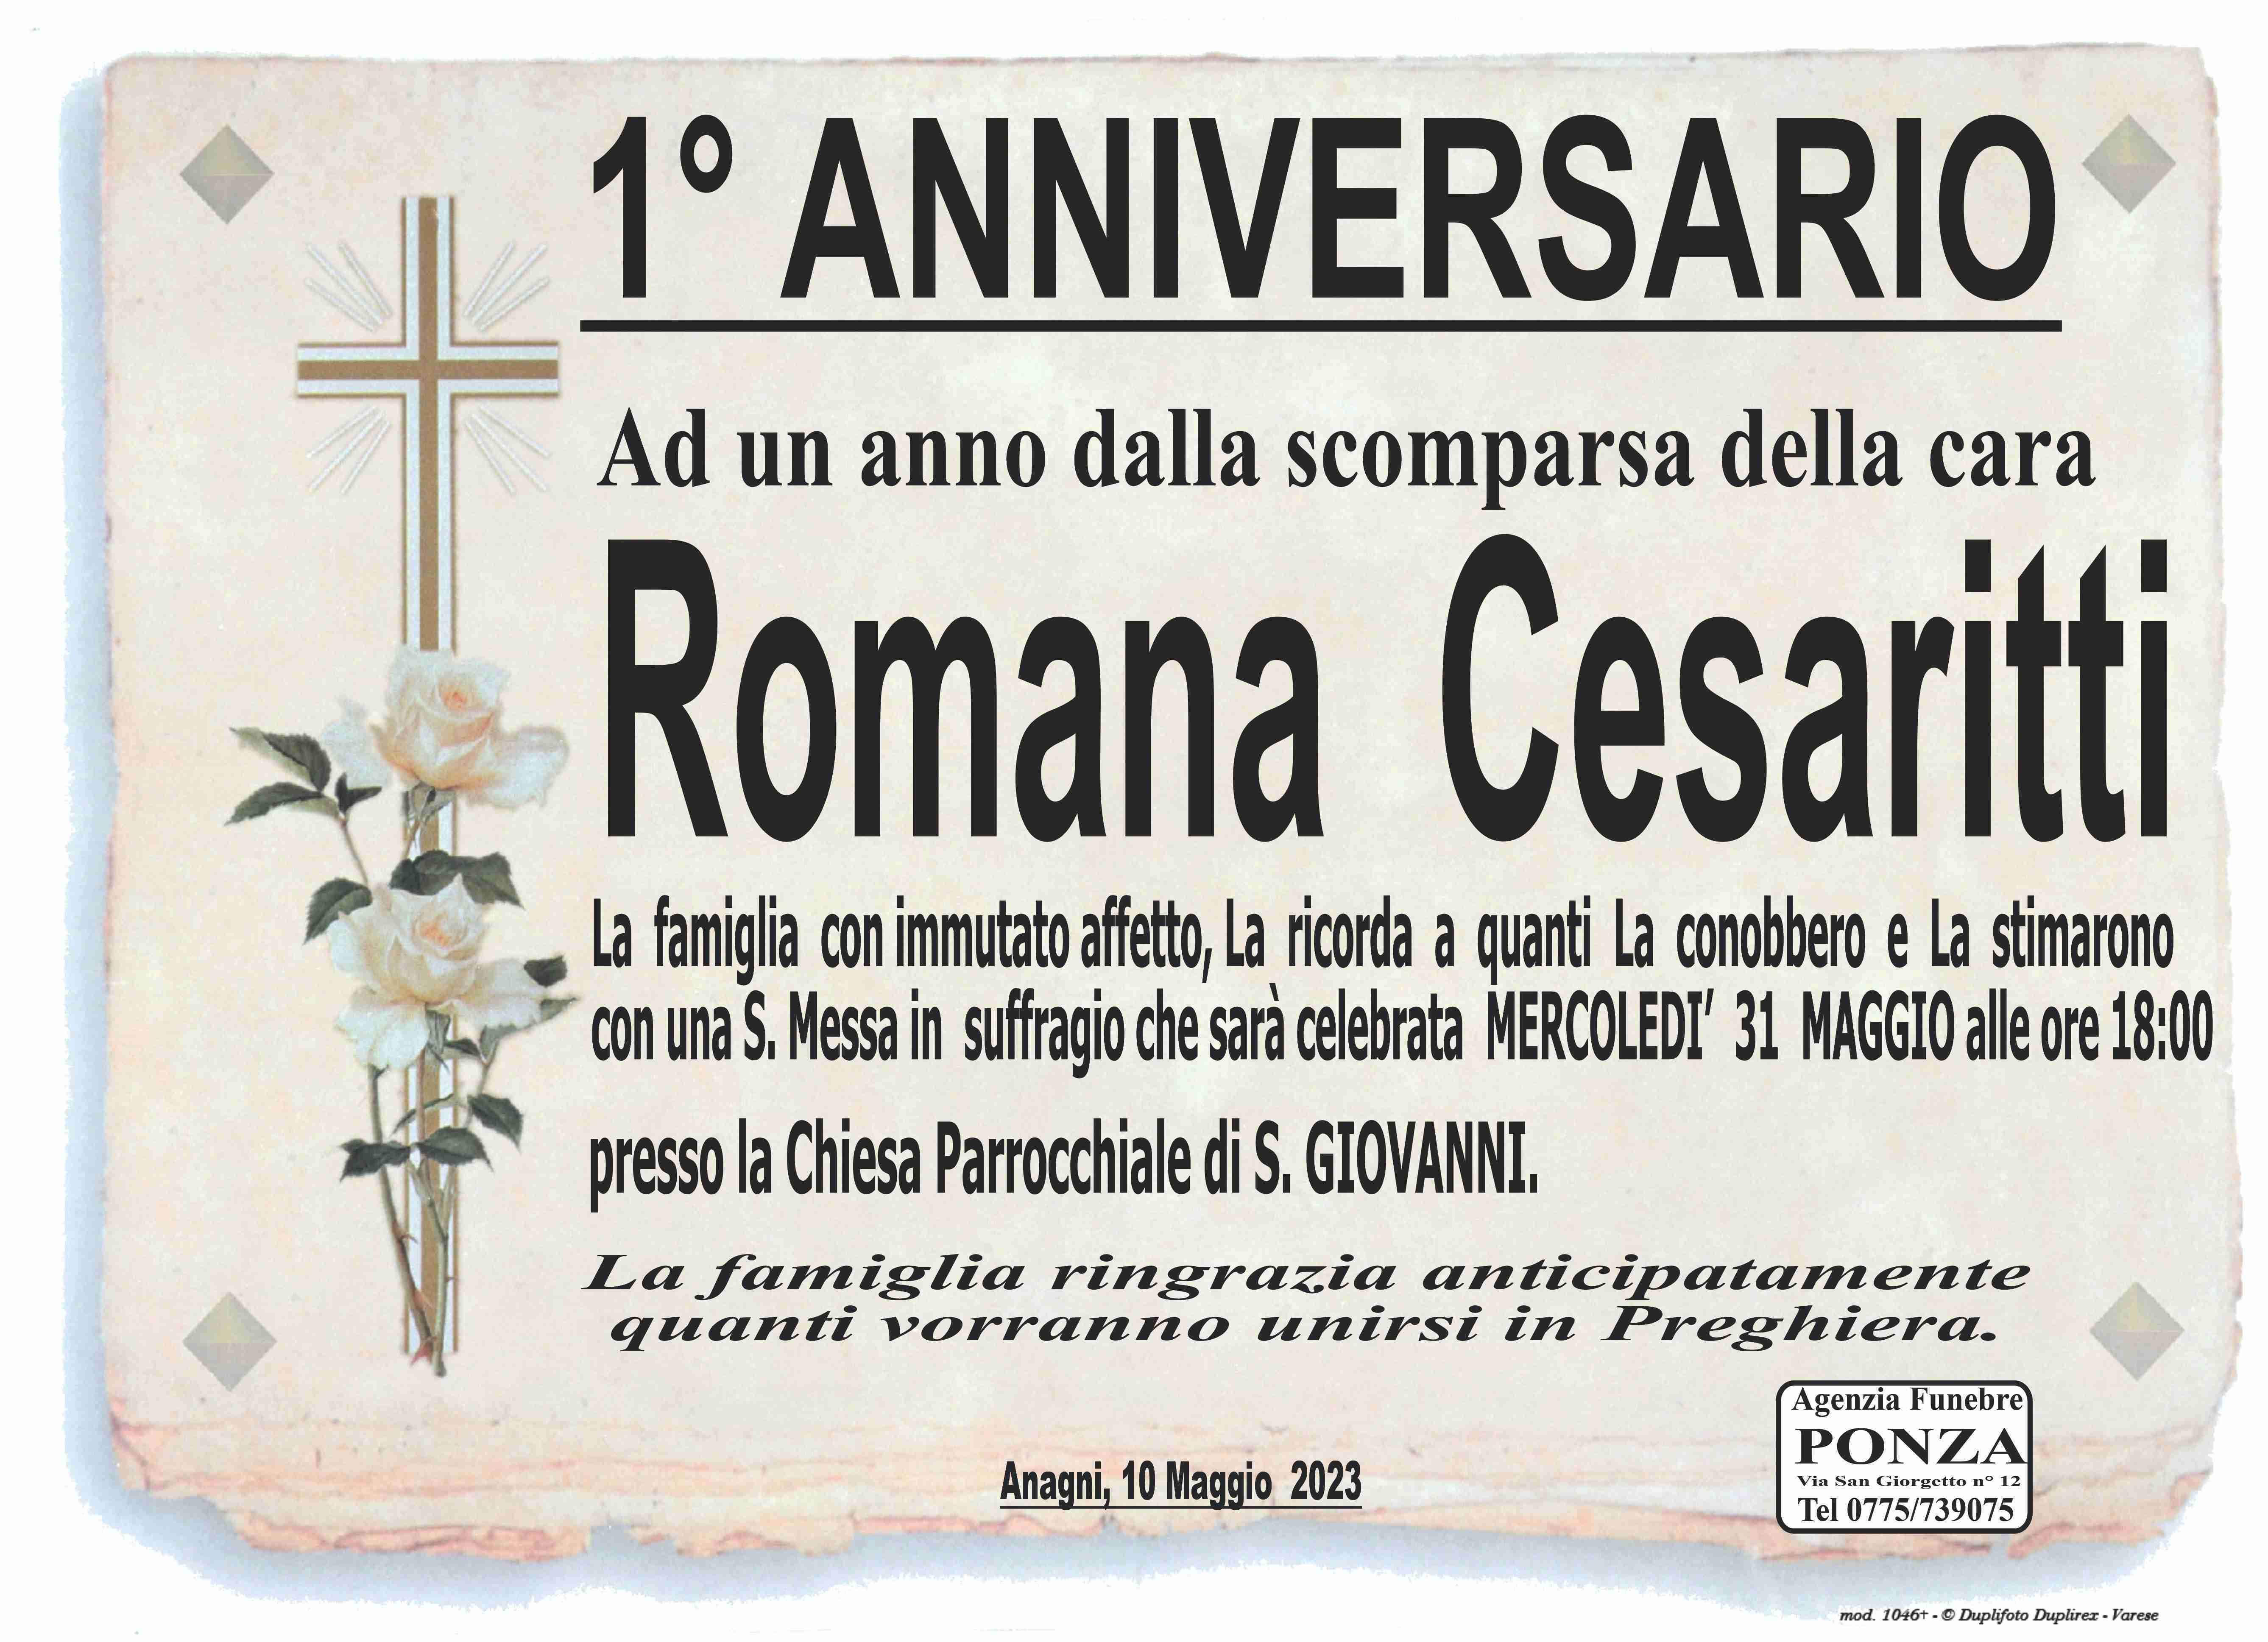 Romana Cesaritti